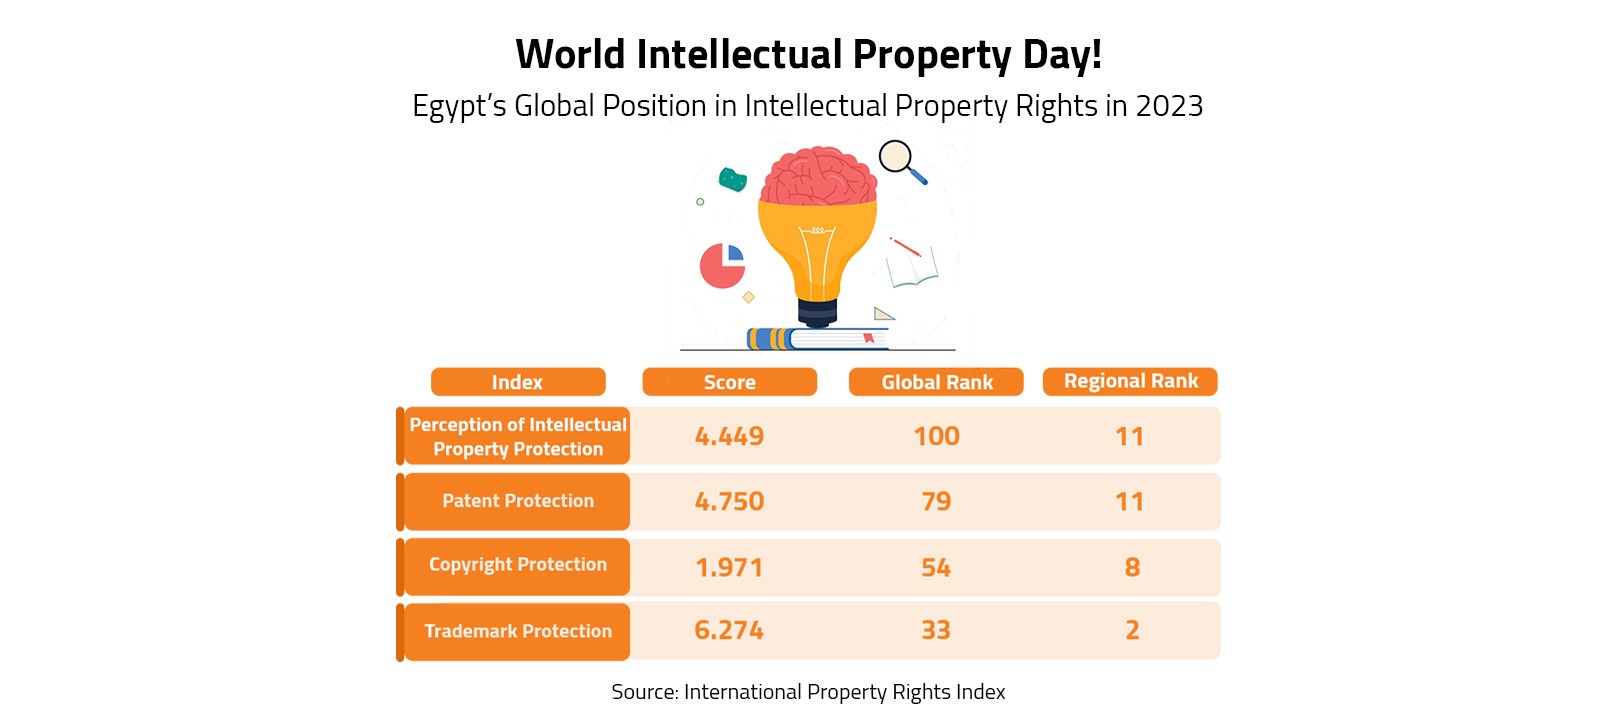 World Intellectual Property Day!